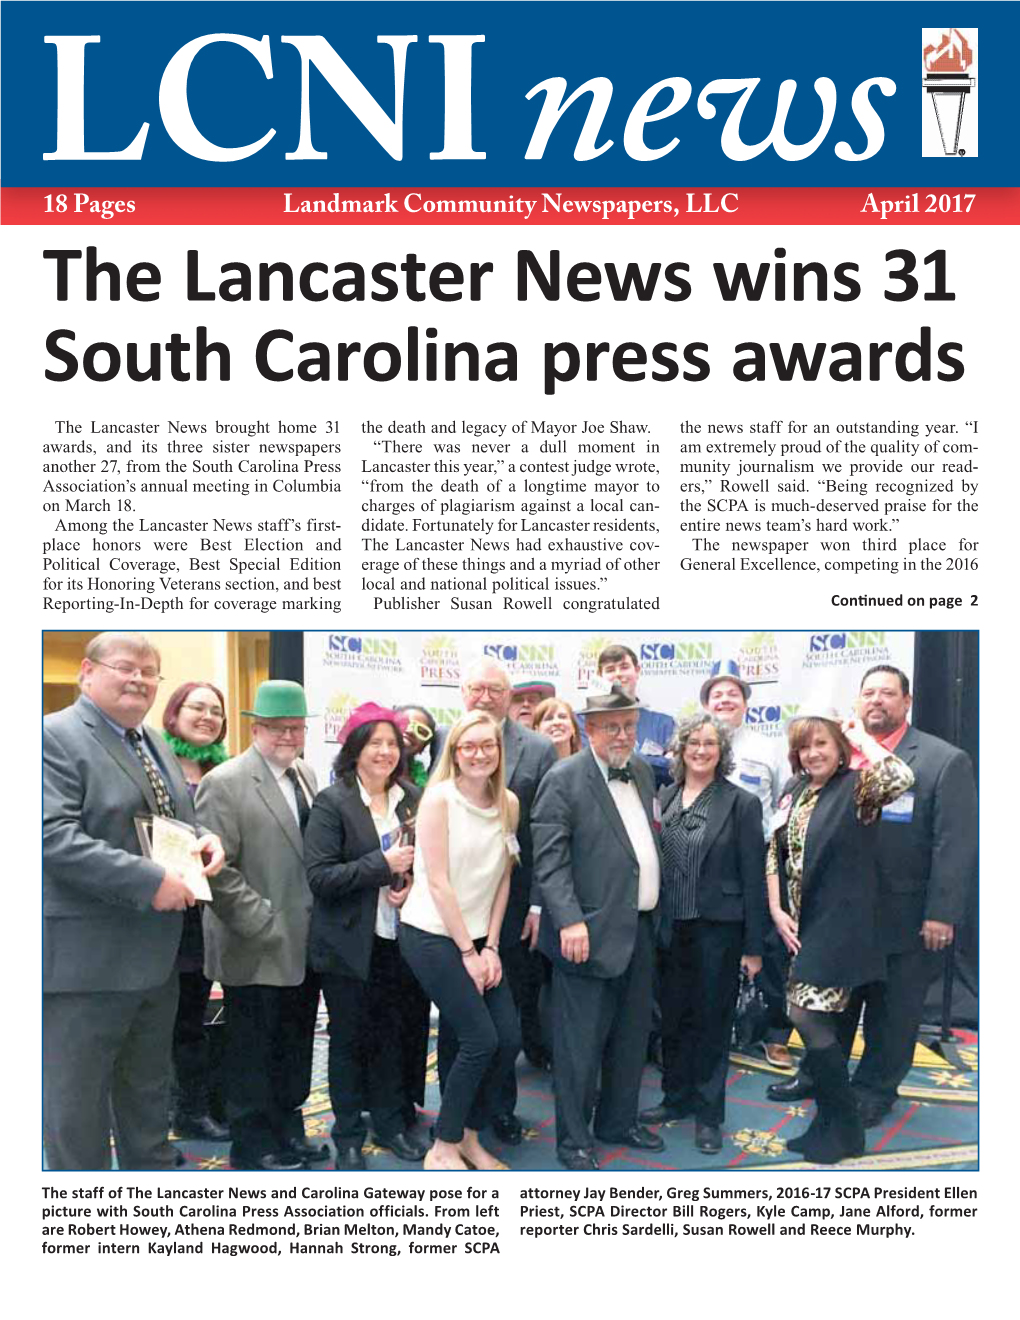 The Lancaster News Wins 31 South Carolina Press Awards